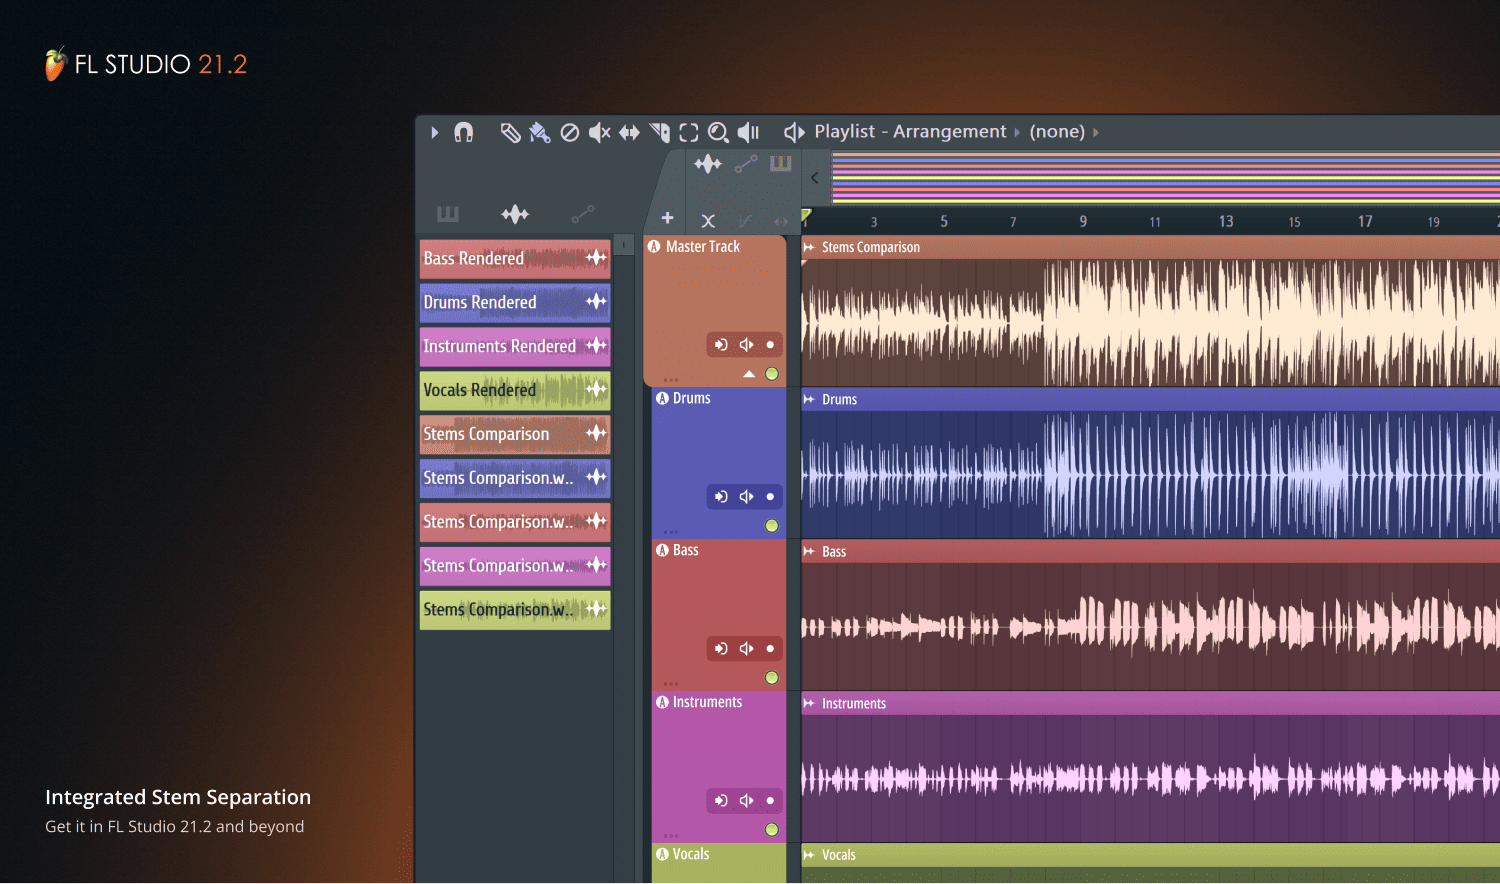 FL Studio 21.2 Stem Separation Flatlay Image Credits: Image-Line